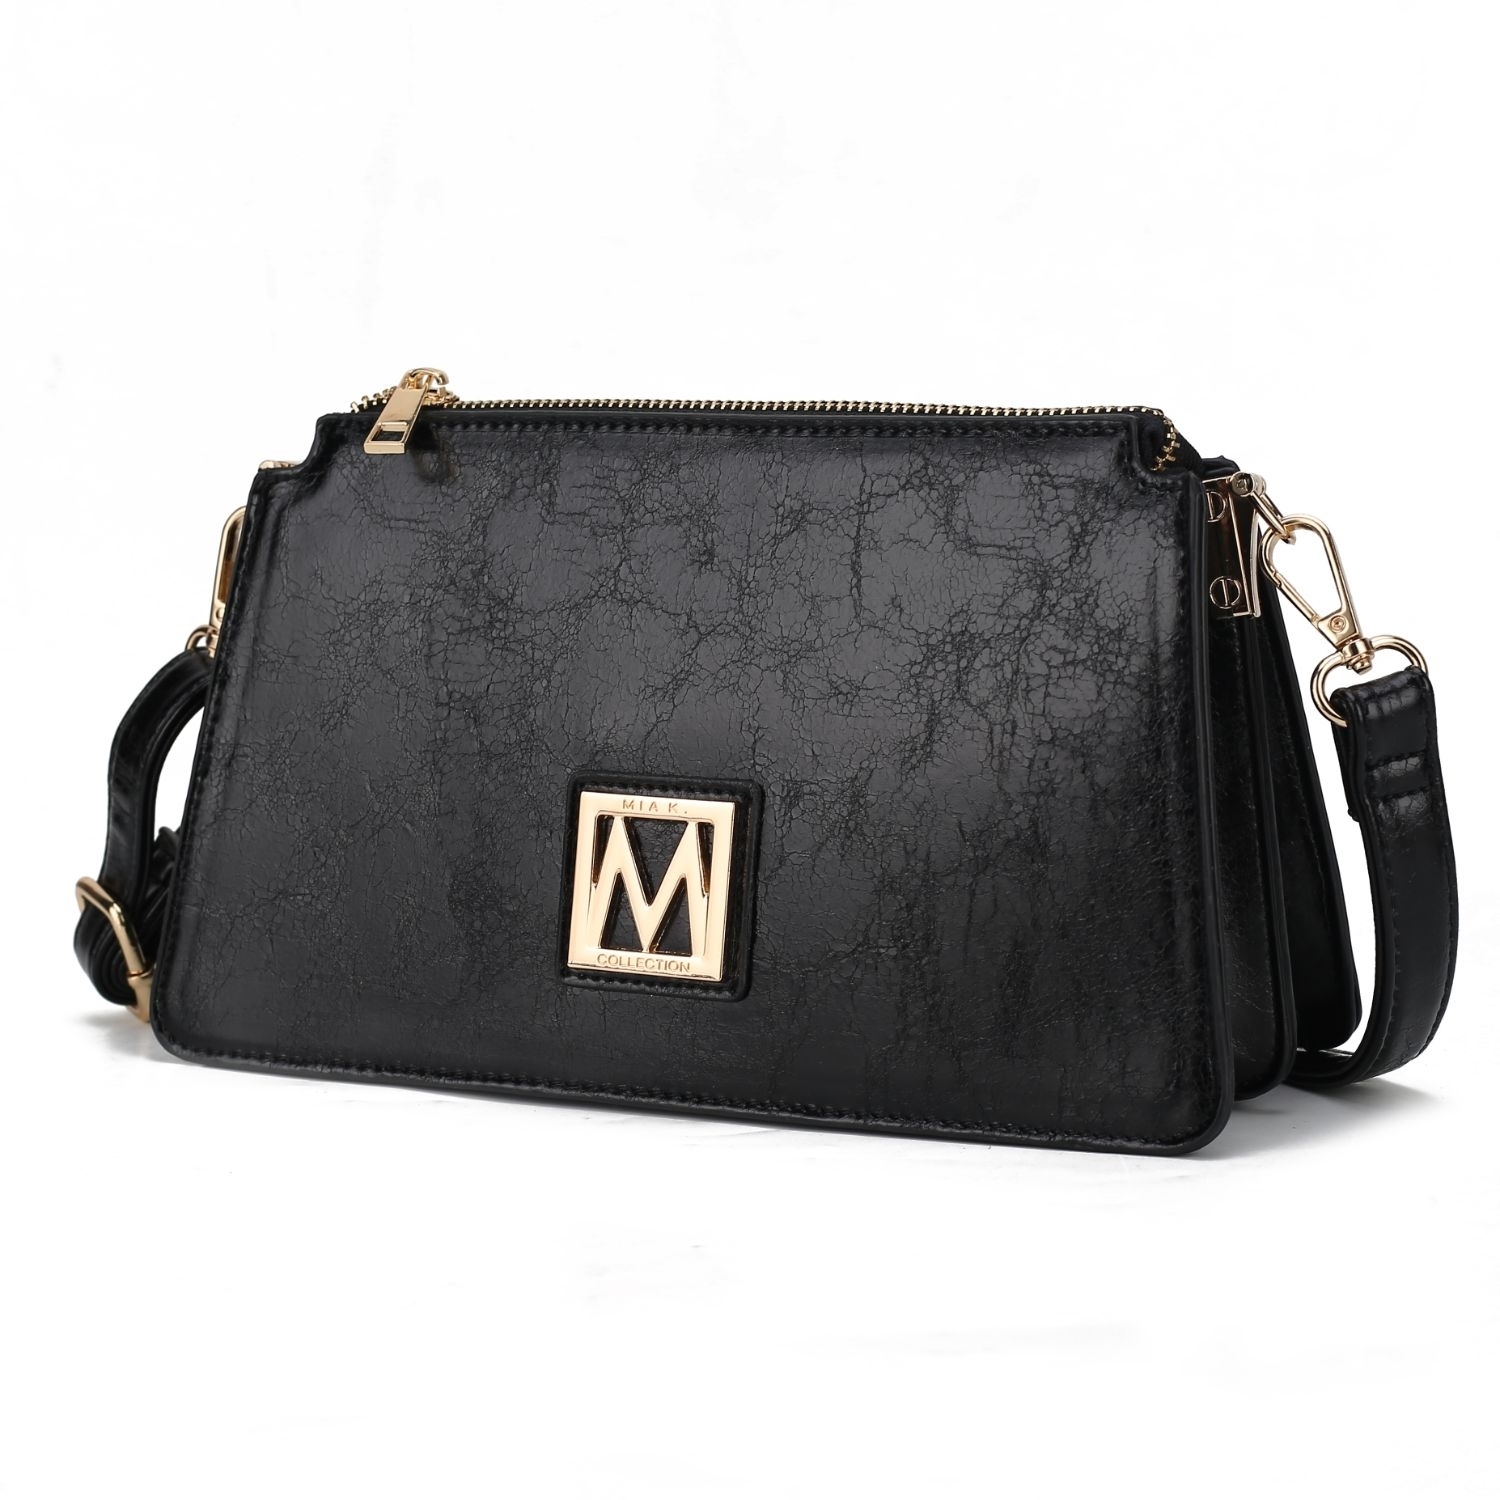 MKF Collection Domitila Vegan Leather Women's Shoulder Handbag By Mia K - Yellow